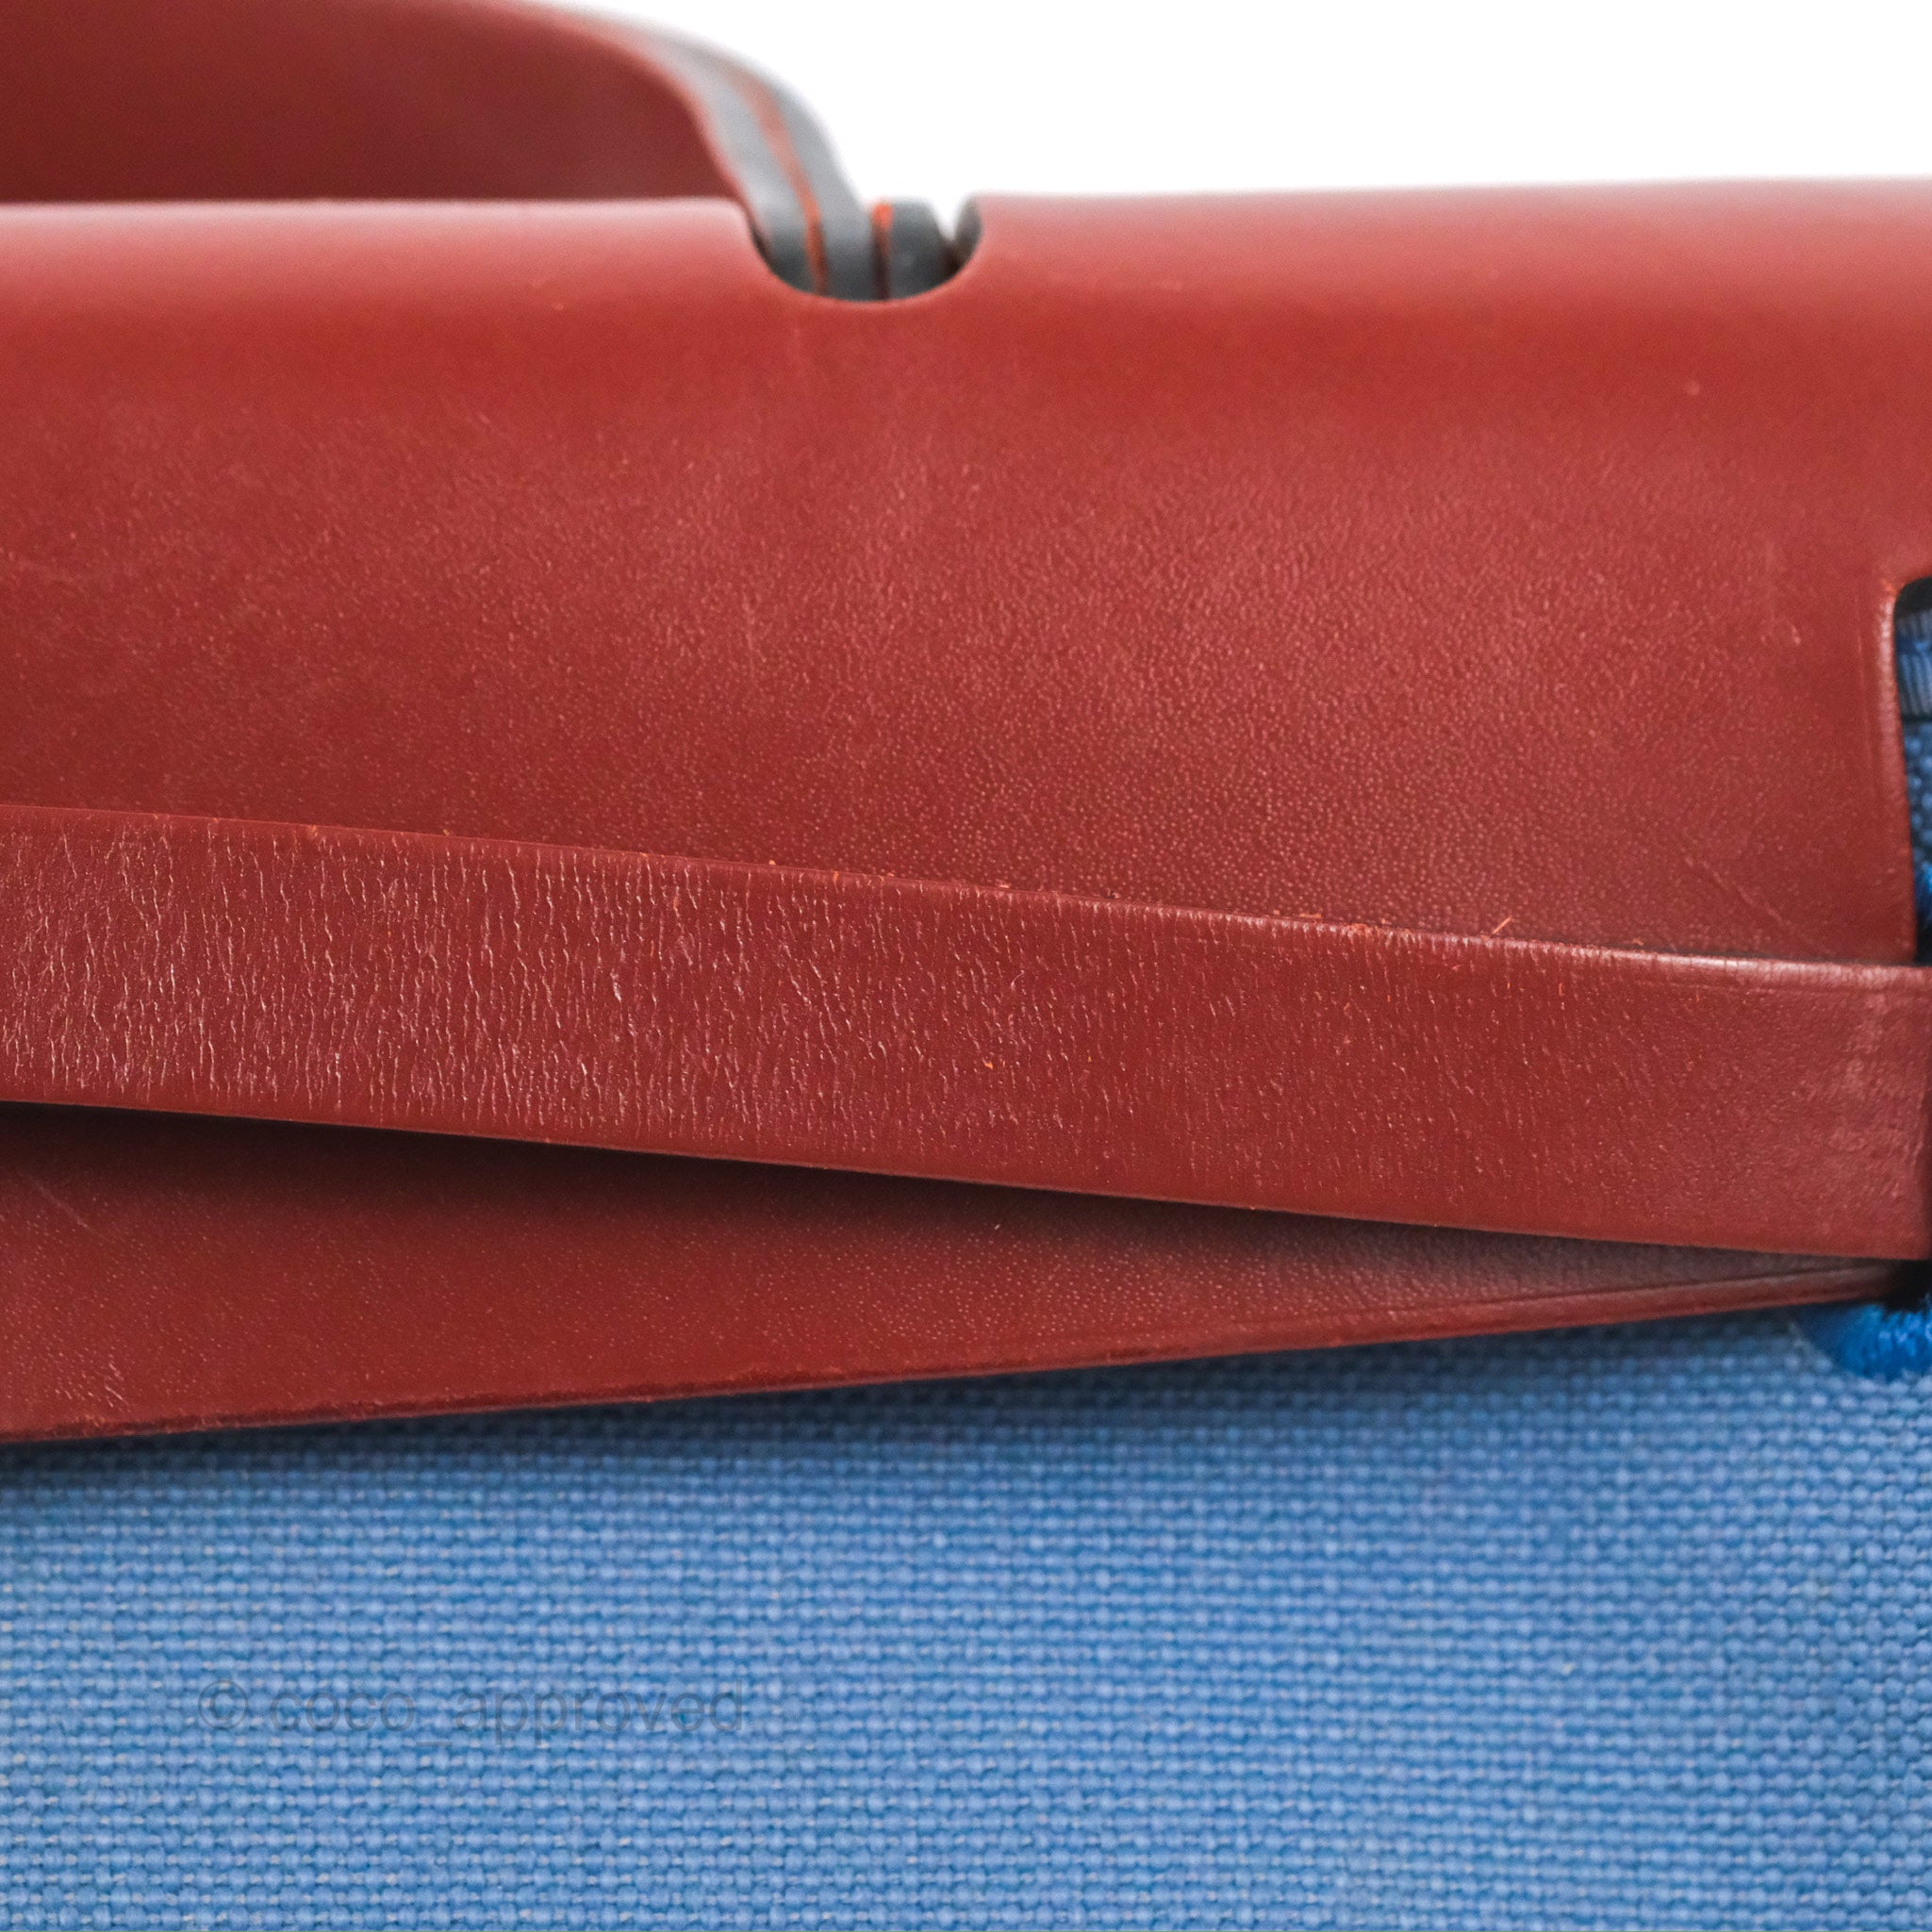 Hermès Herbag Zip 31 Rouge H/Bleu Agate Canvas Palladium Hardware – Coco  Approved Studio